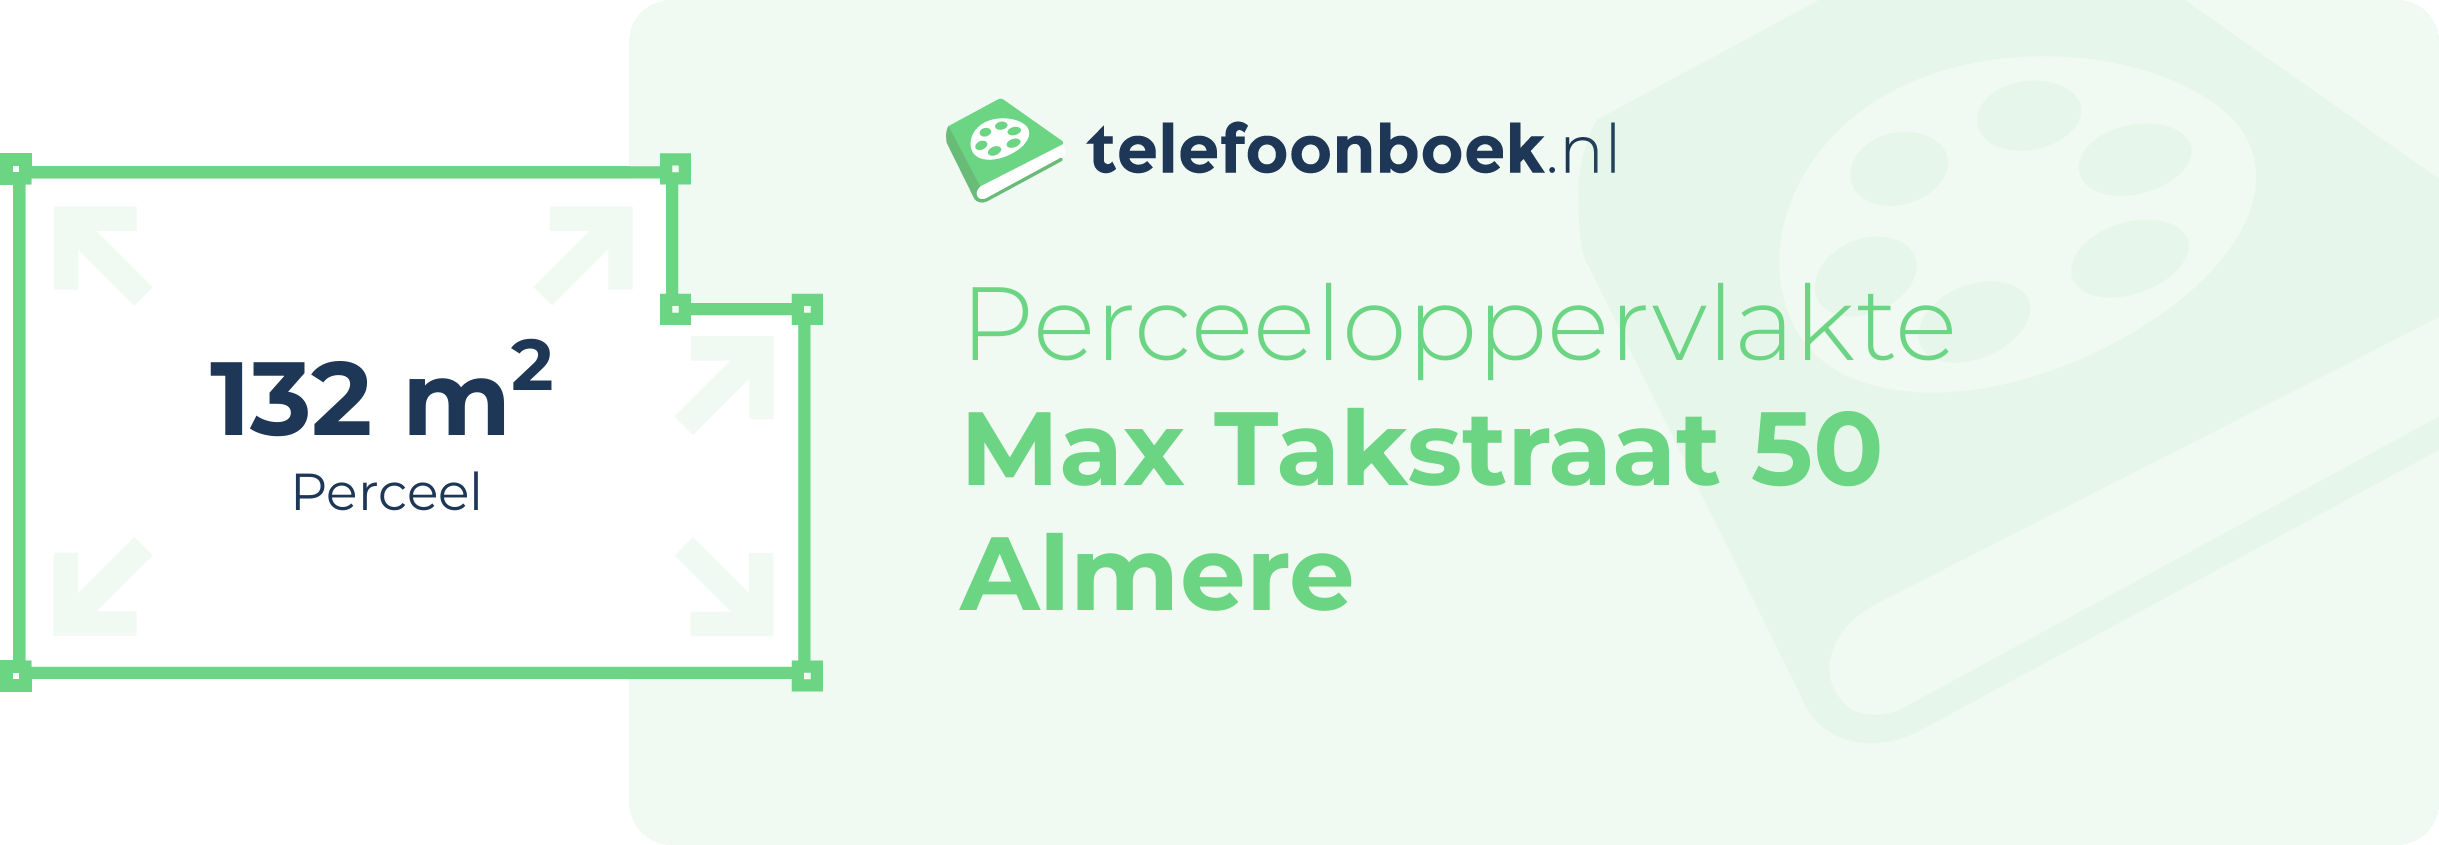 Perceeloppervlakte Max Takstraat 50 Almere